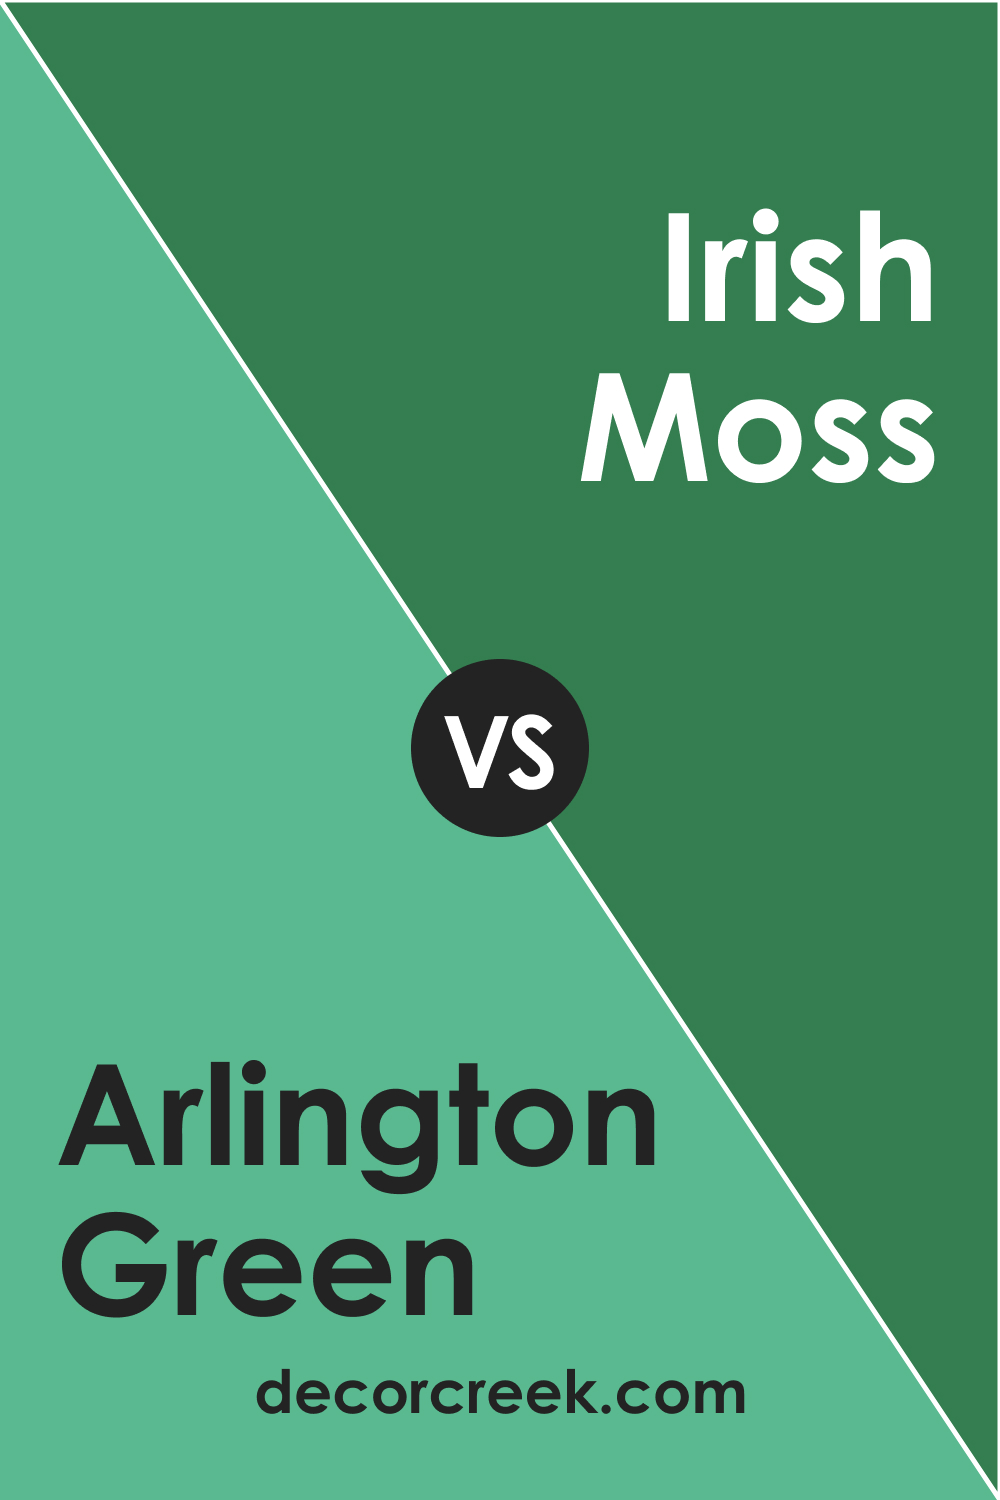 Arlington Green 580 vs. BM 2036-20 Irish Moss